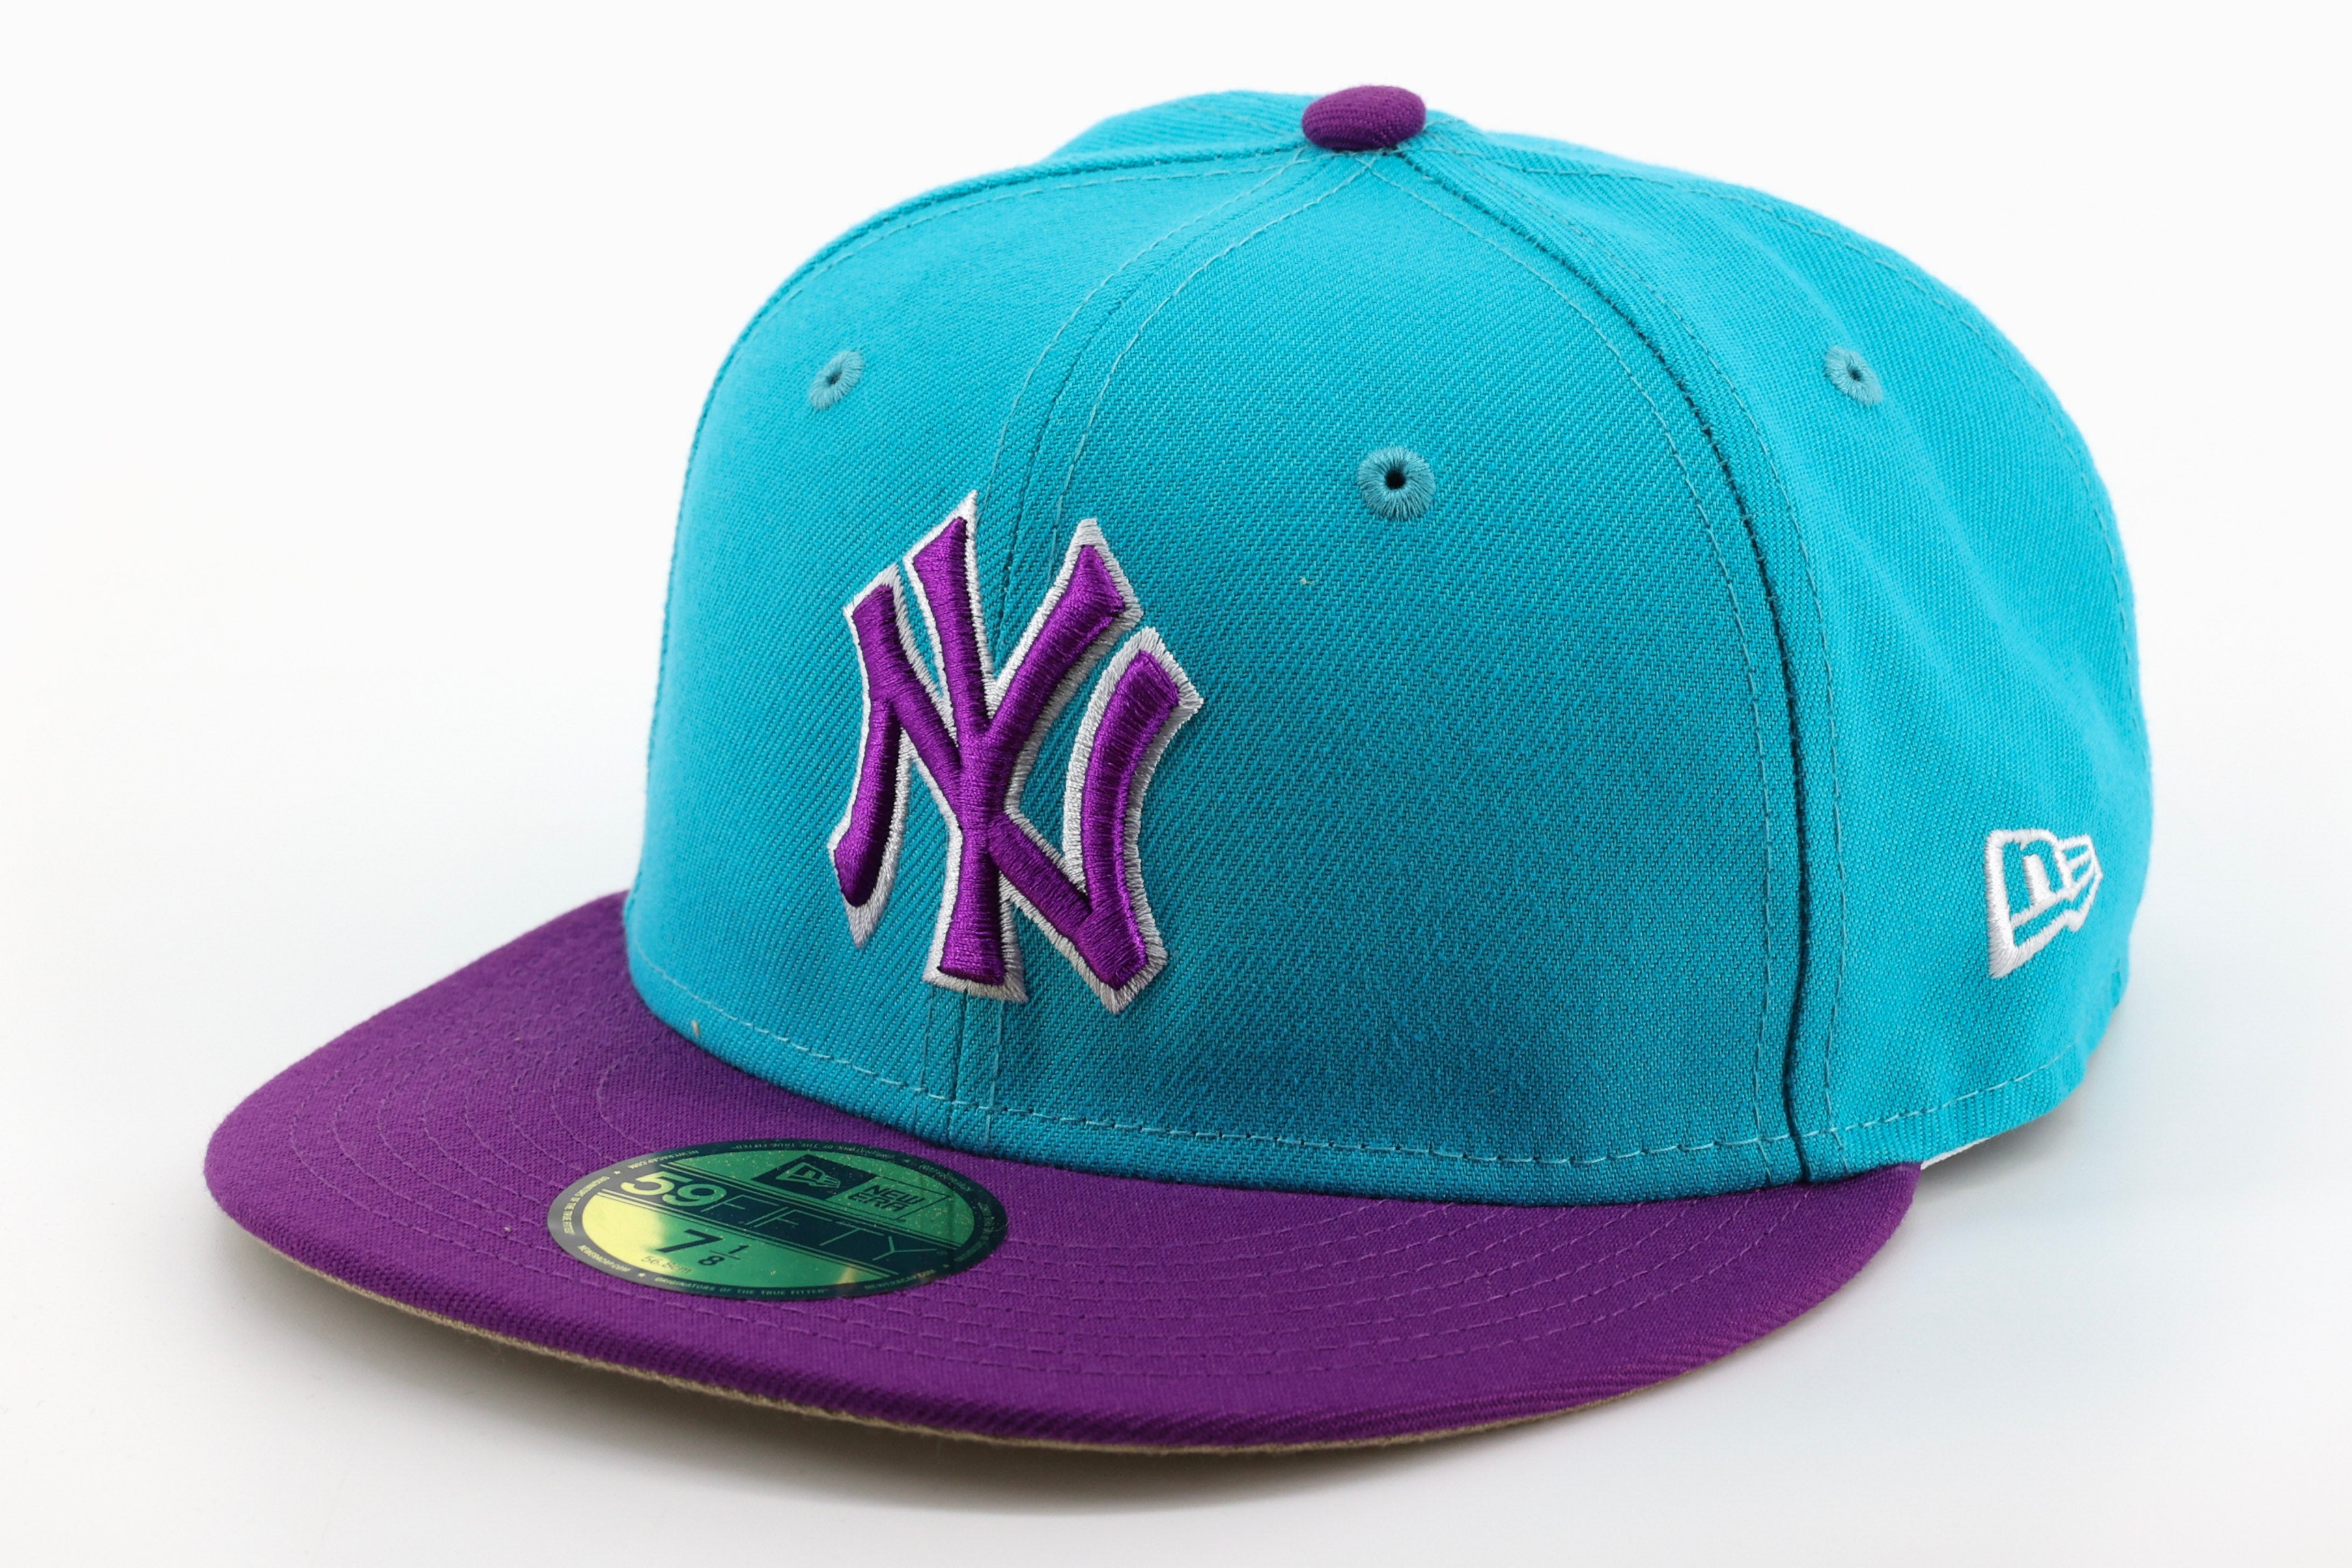 New Era 59 / 50 Hat - New York Yankees - Teal / Purple 7 1/8 / Teal / Purple